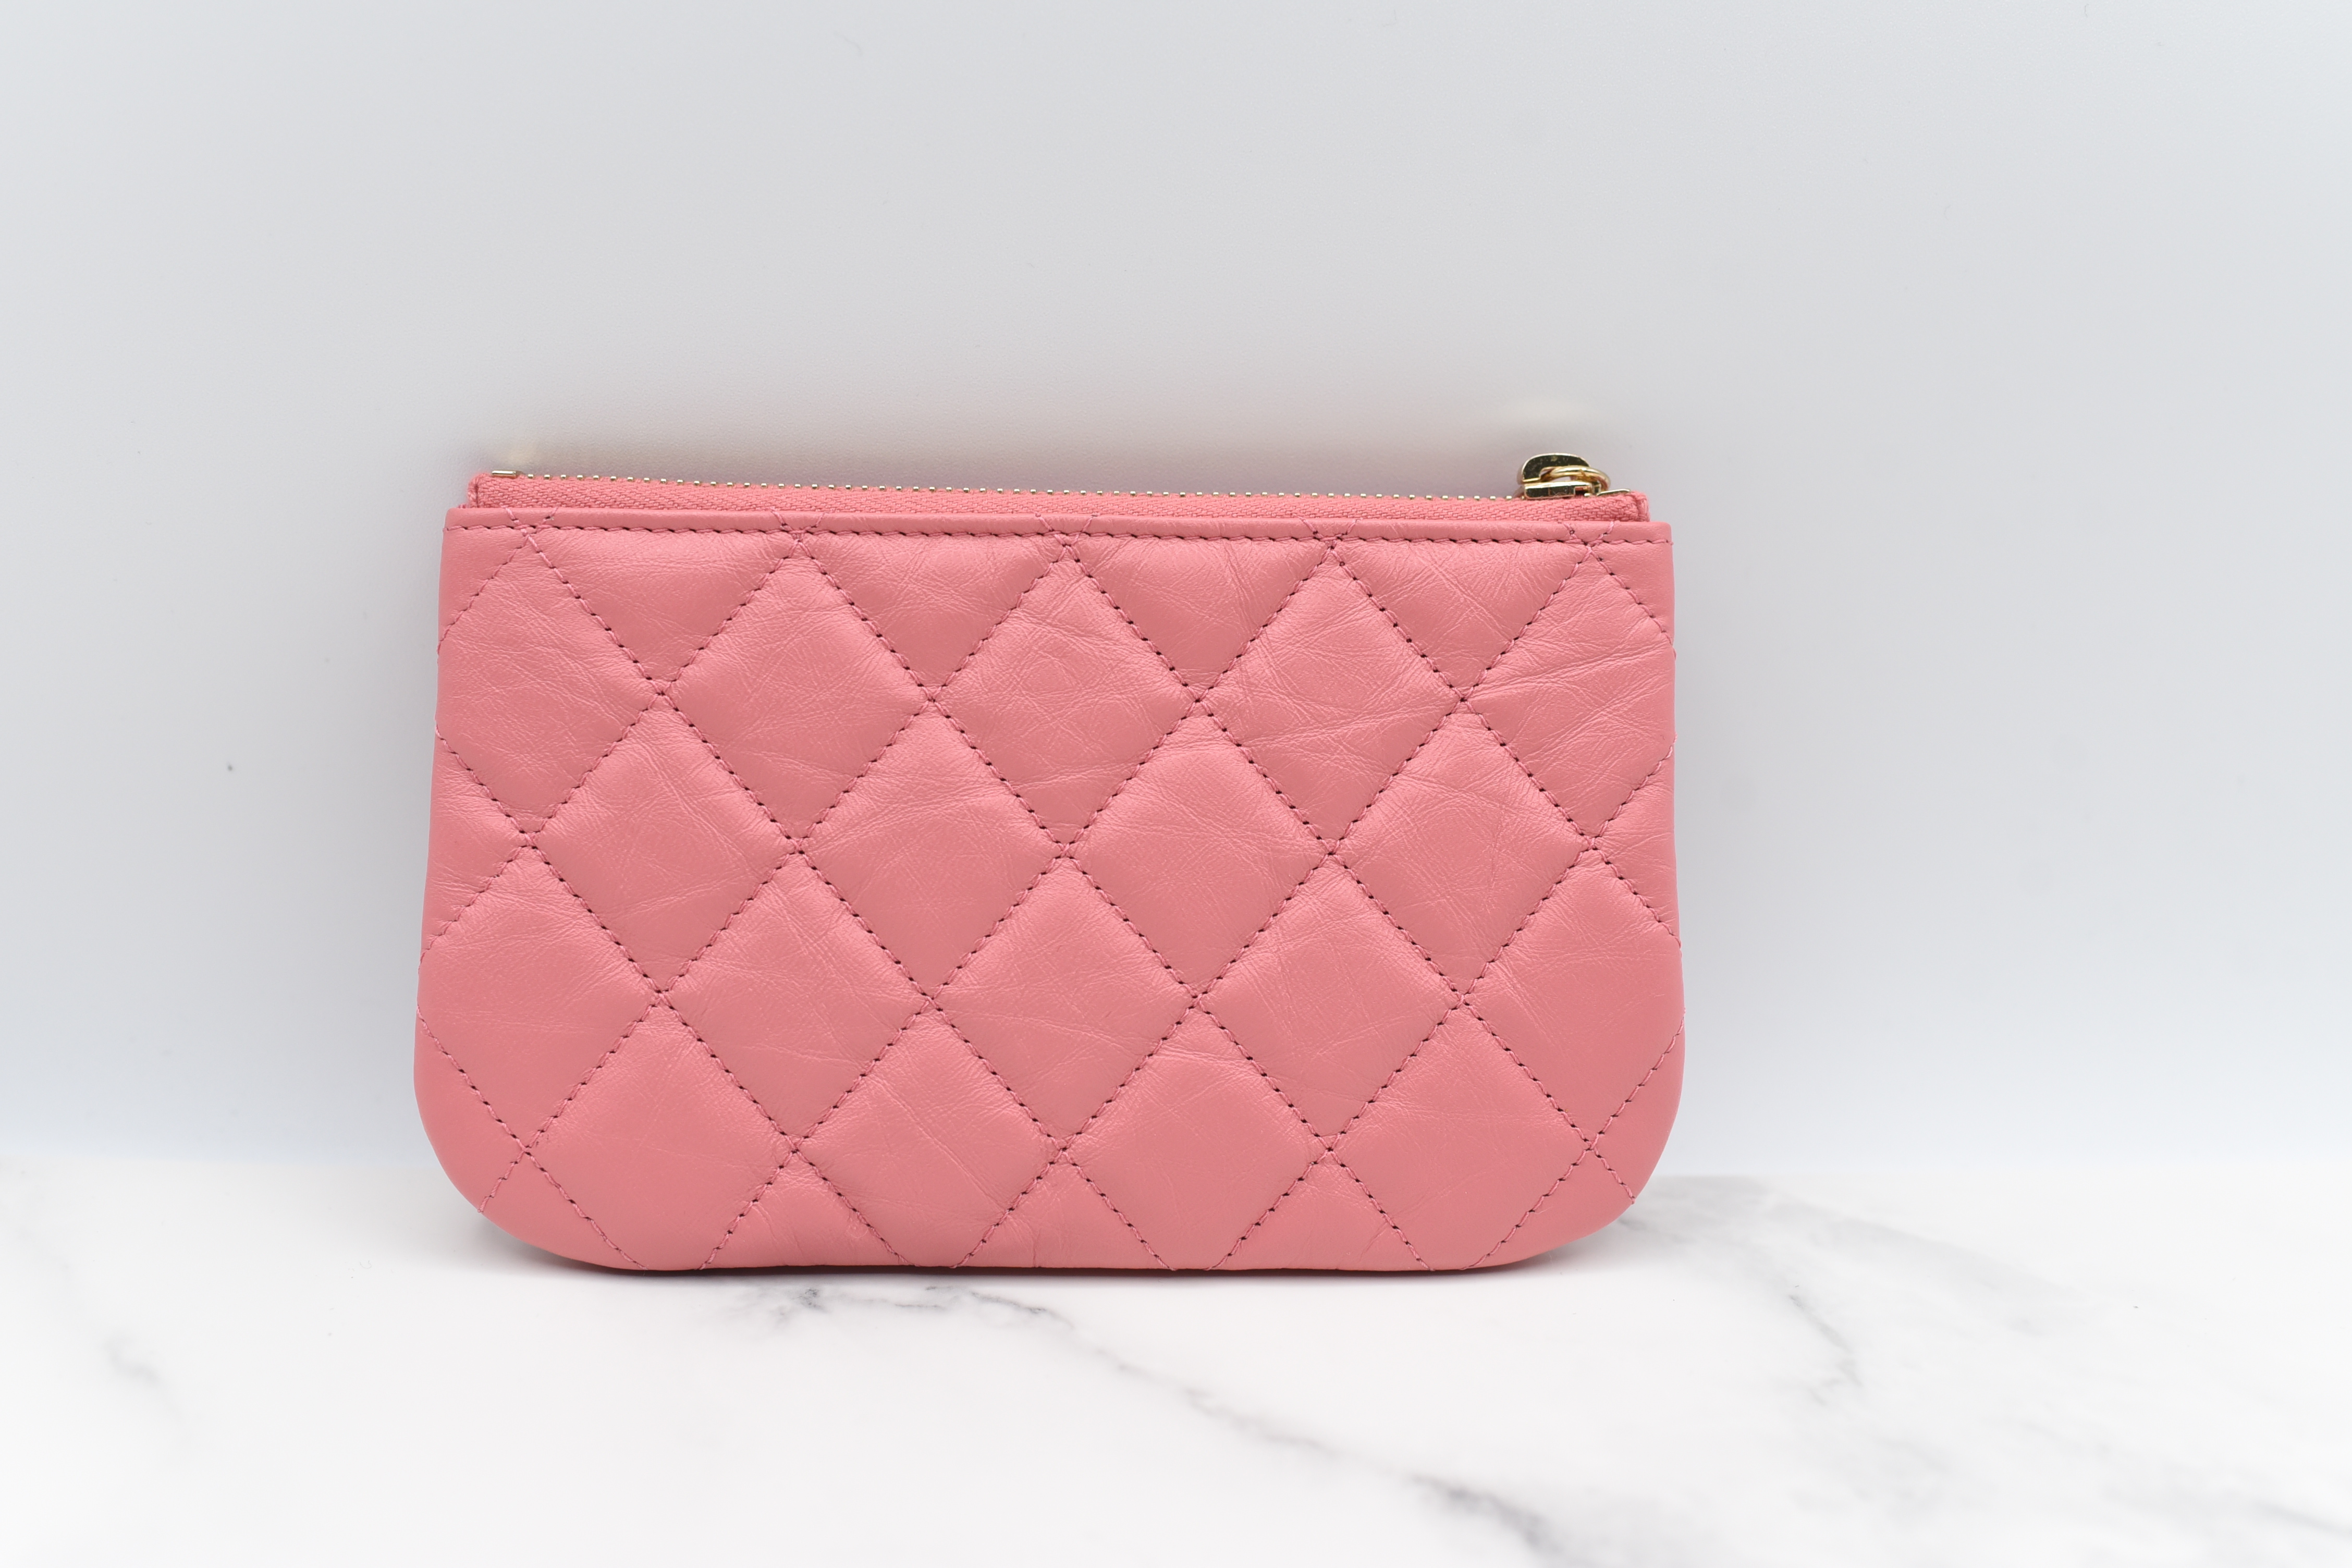 Chanel SLG Mini O Case Reissue, Pink Calfskin Leather with Gold Hardware,  New in Box GA001 - Julia Rose Boston